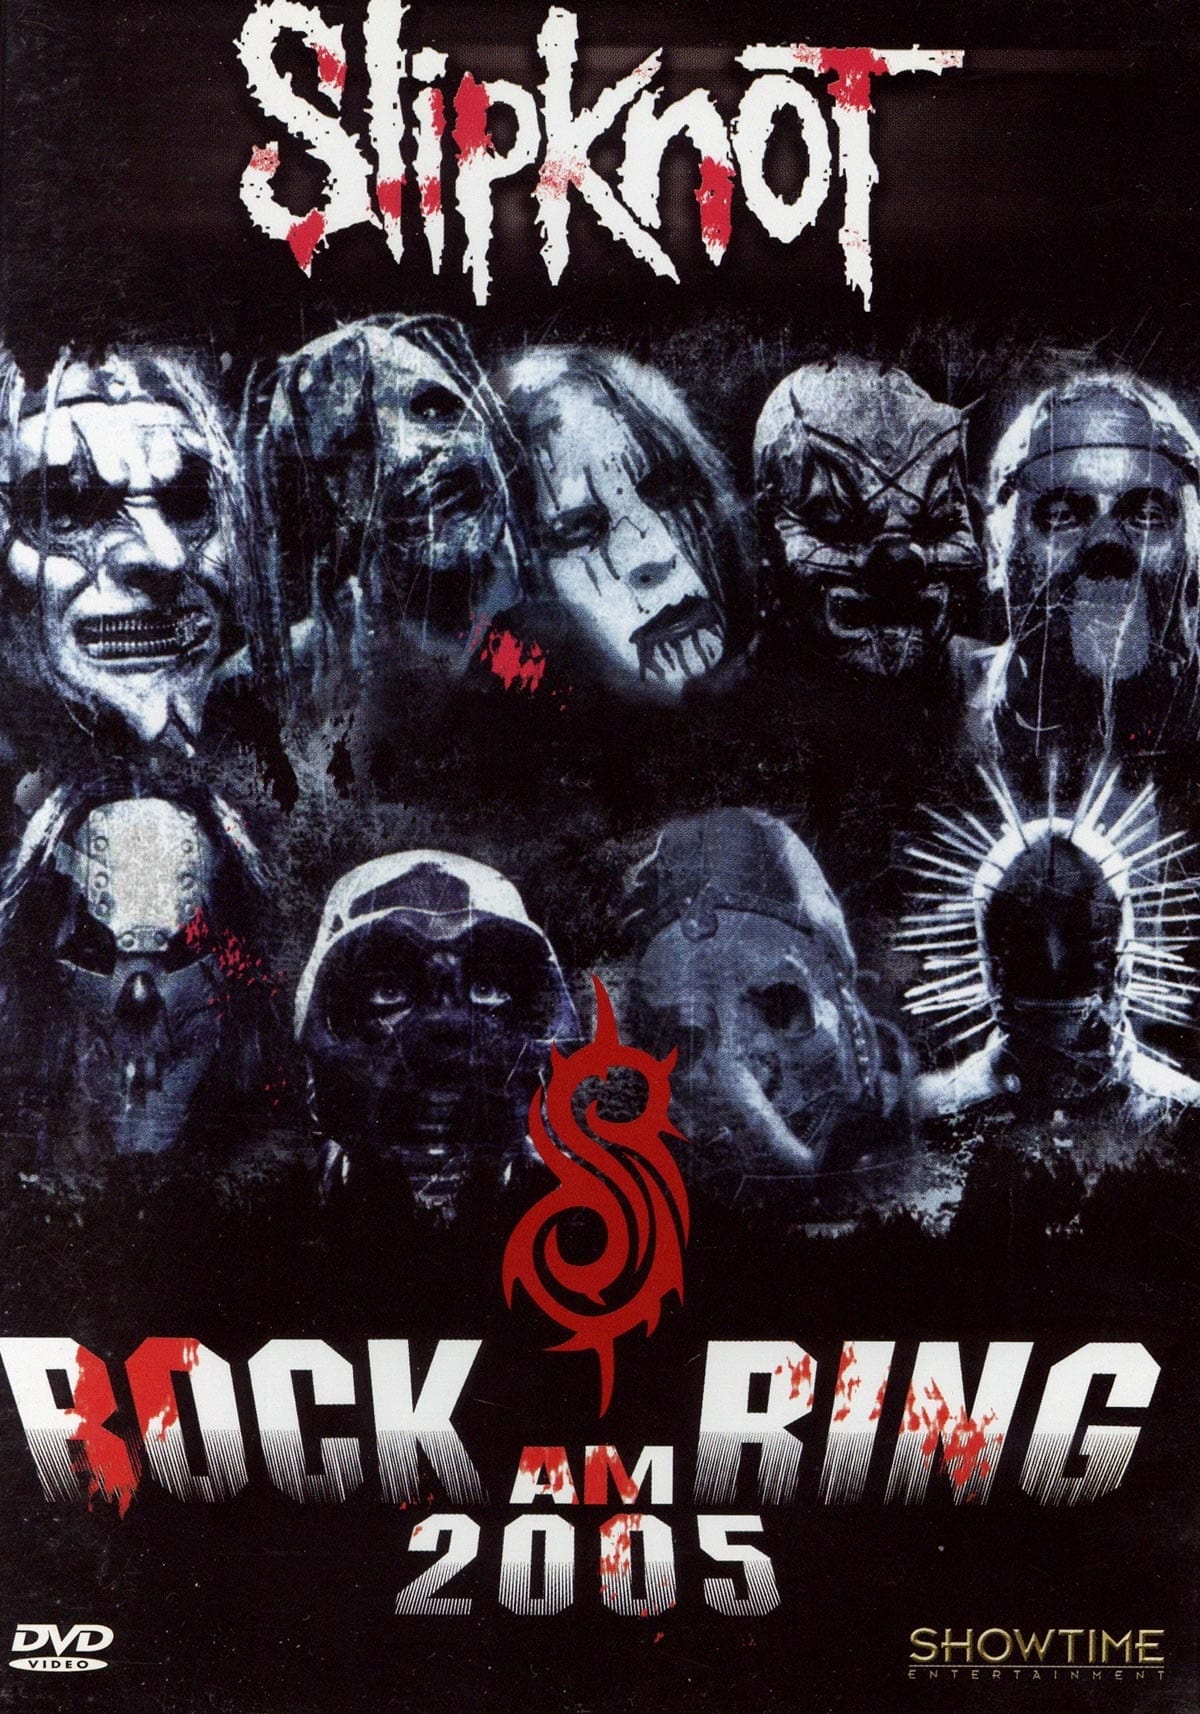 Slipknot: Rock Am Ring 2005